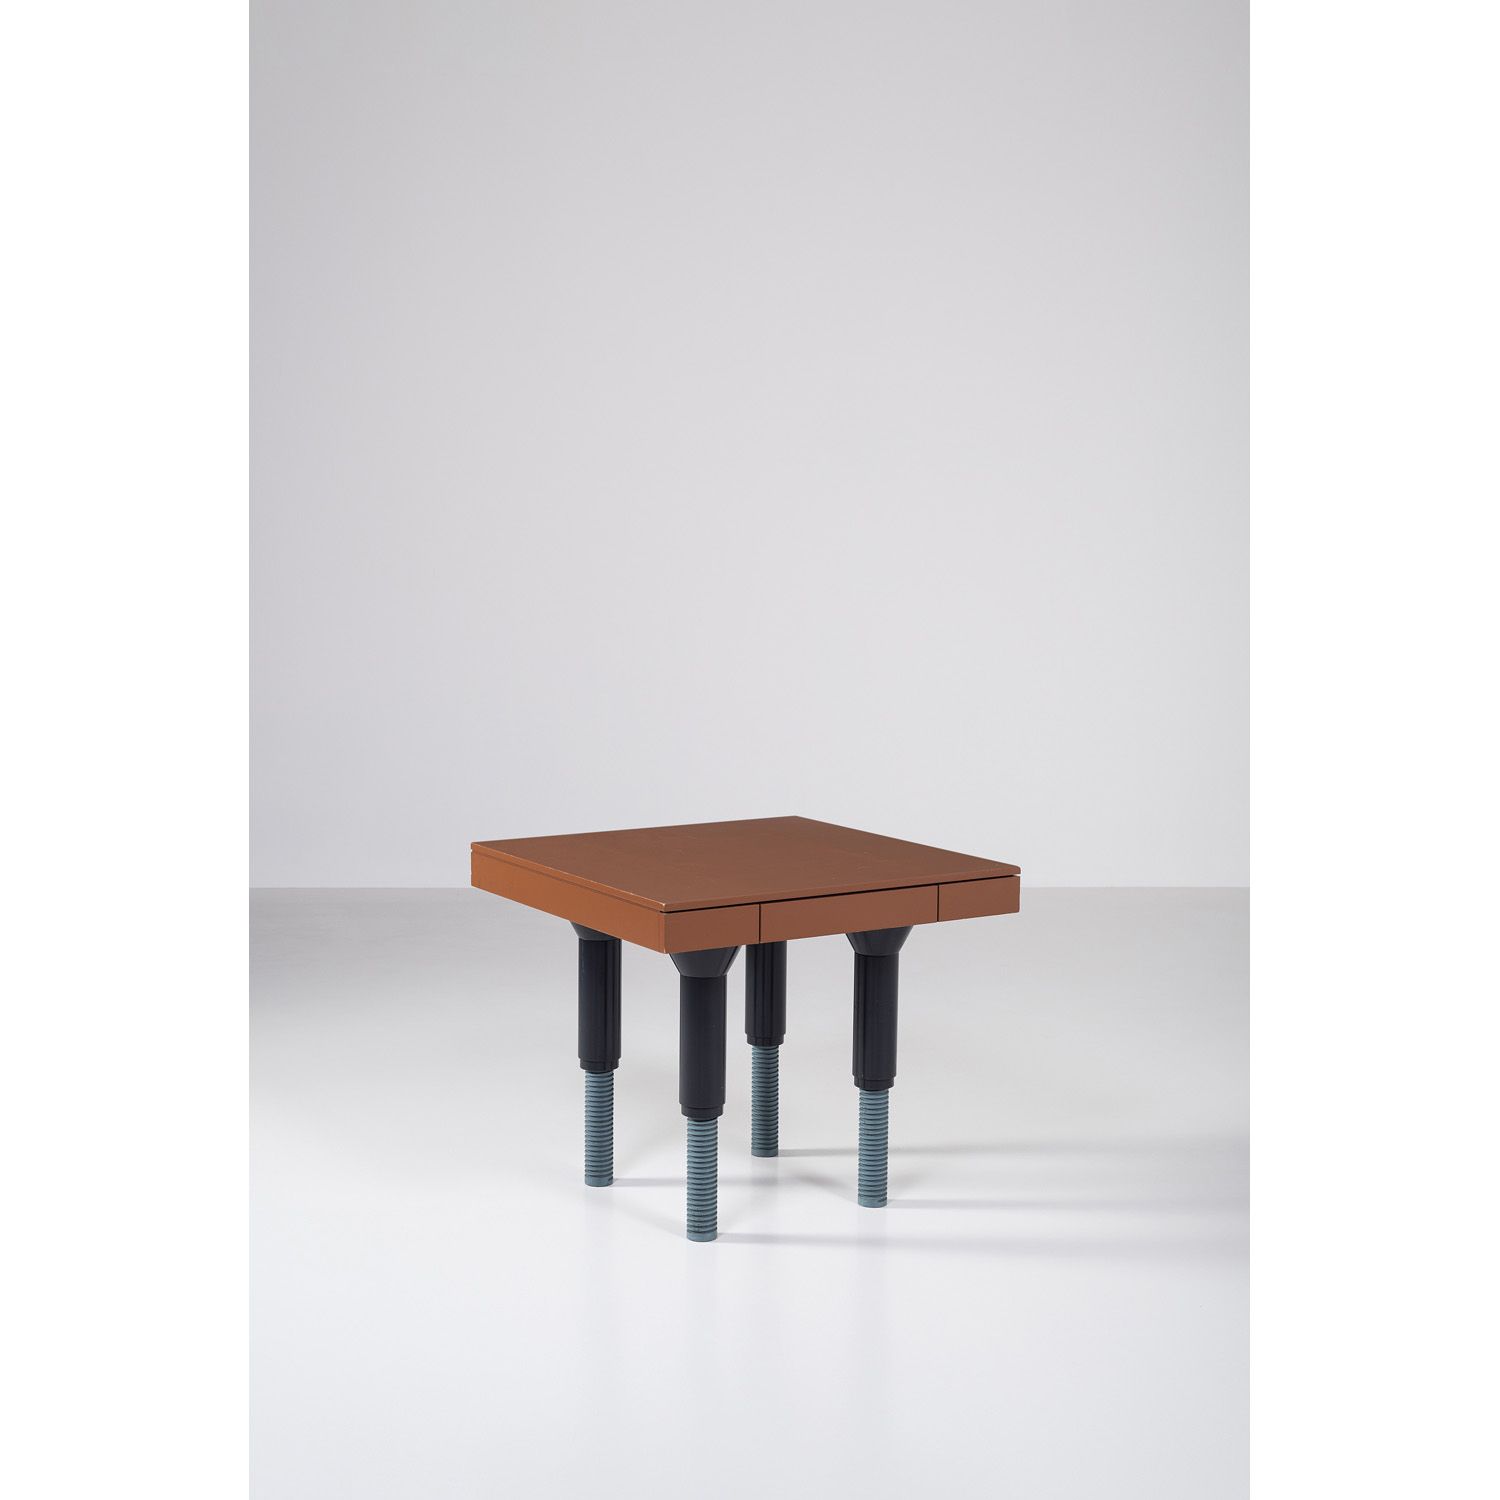 Null 内田茂 (1943-2016)

8月 "抽屉桌

漆面木材

模型创建于1989年

高70×宽80×深80厘米

出处：专为《中国日报》设计并制作&hellip;